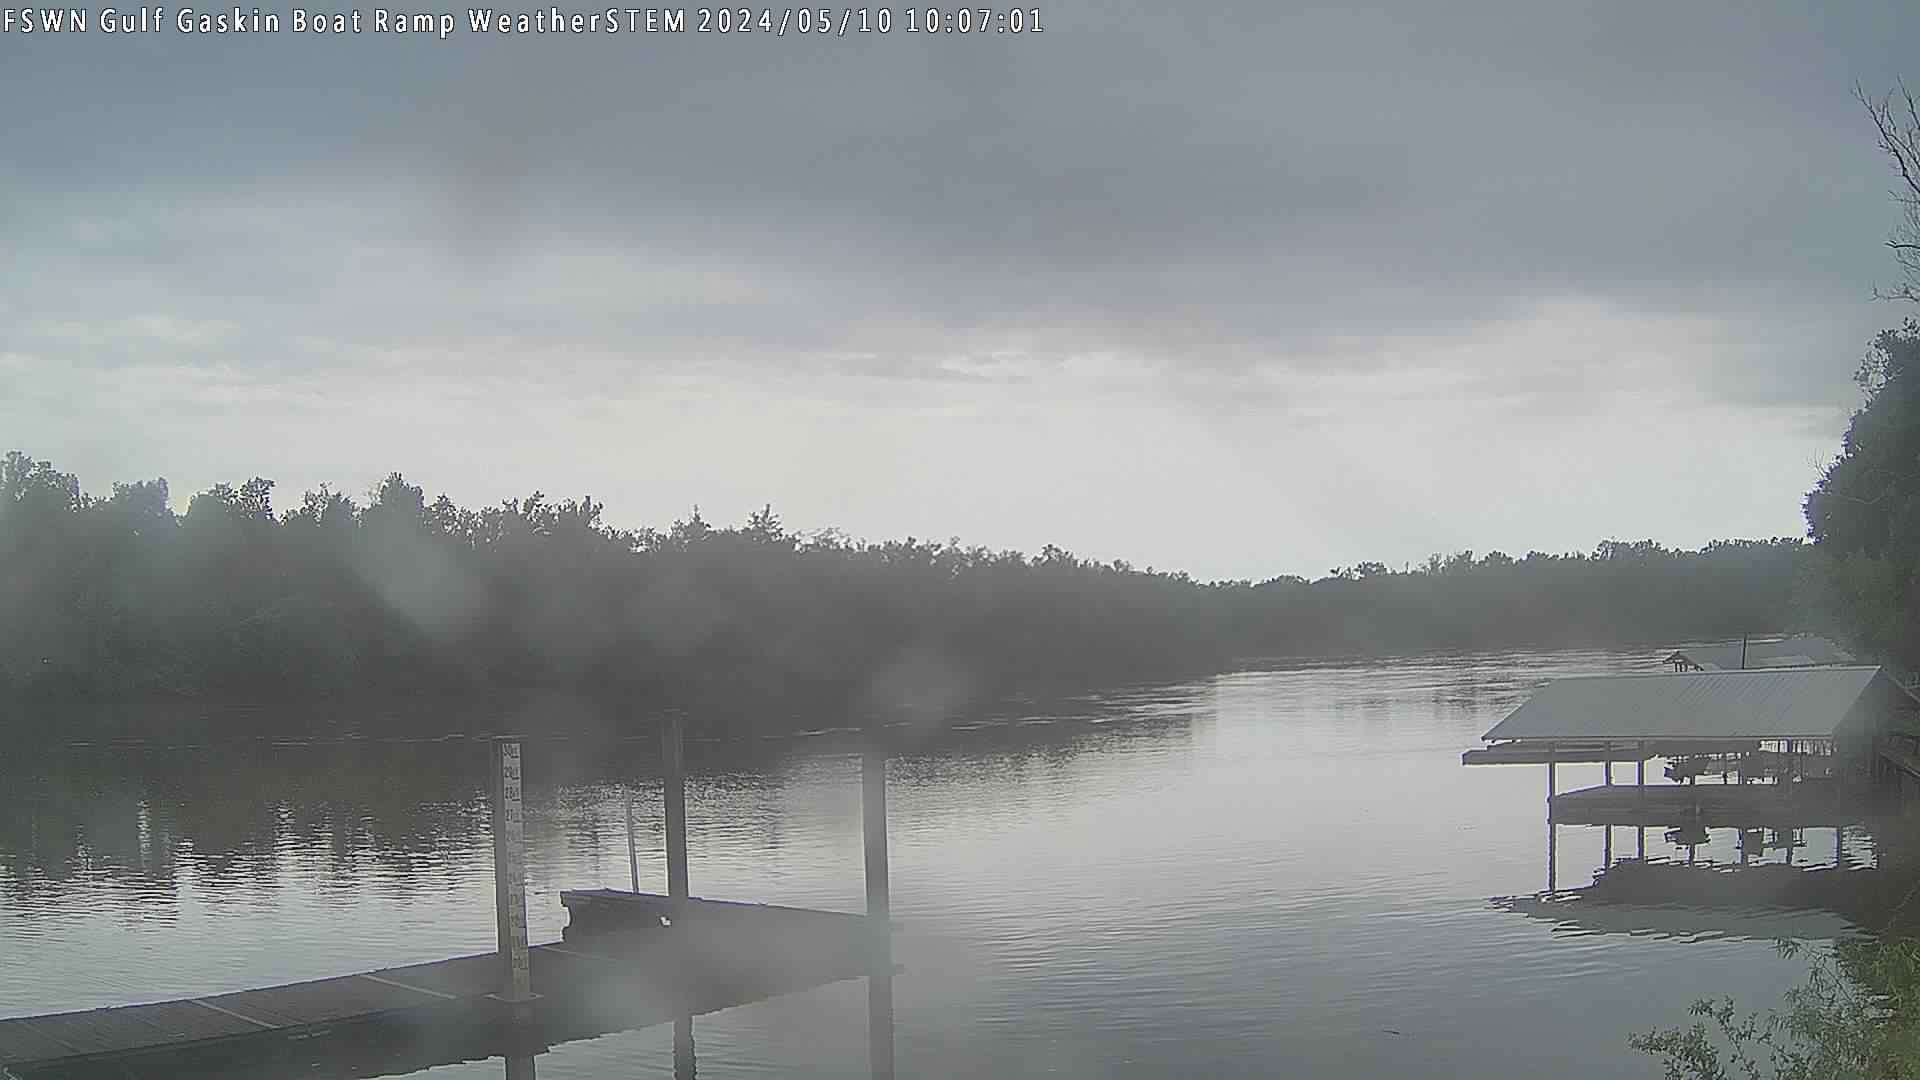  WeatherSTEM River Camera FSWNGaskinPark in Gulf County, Florida FL at FSWN Gulf County Gaskin Boat Ramp